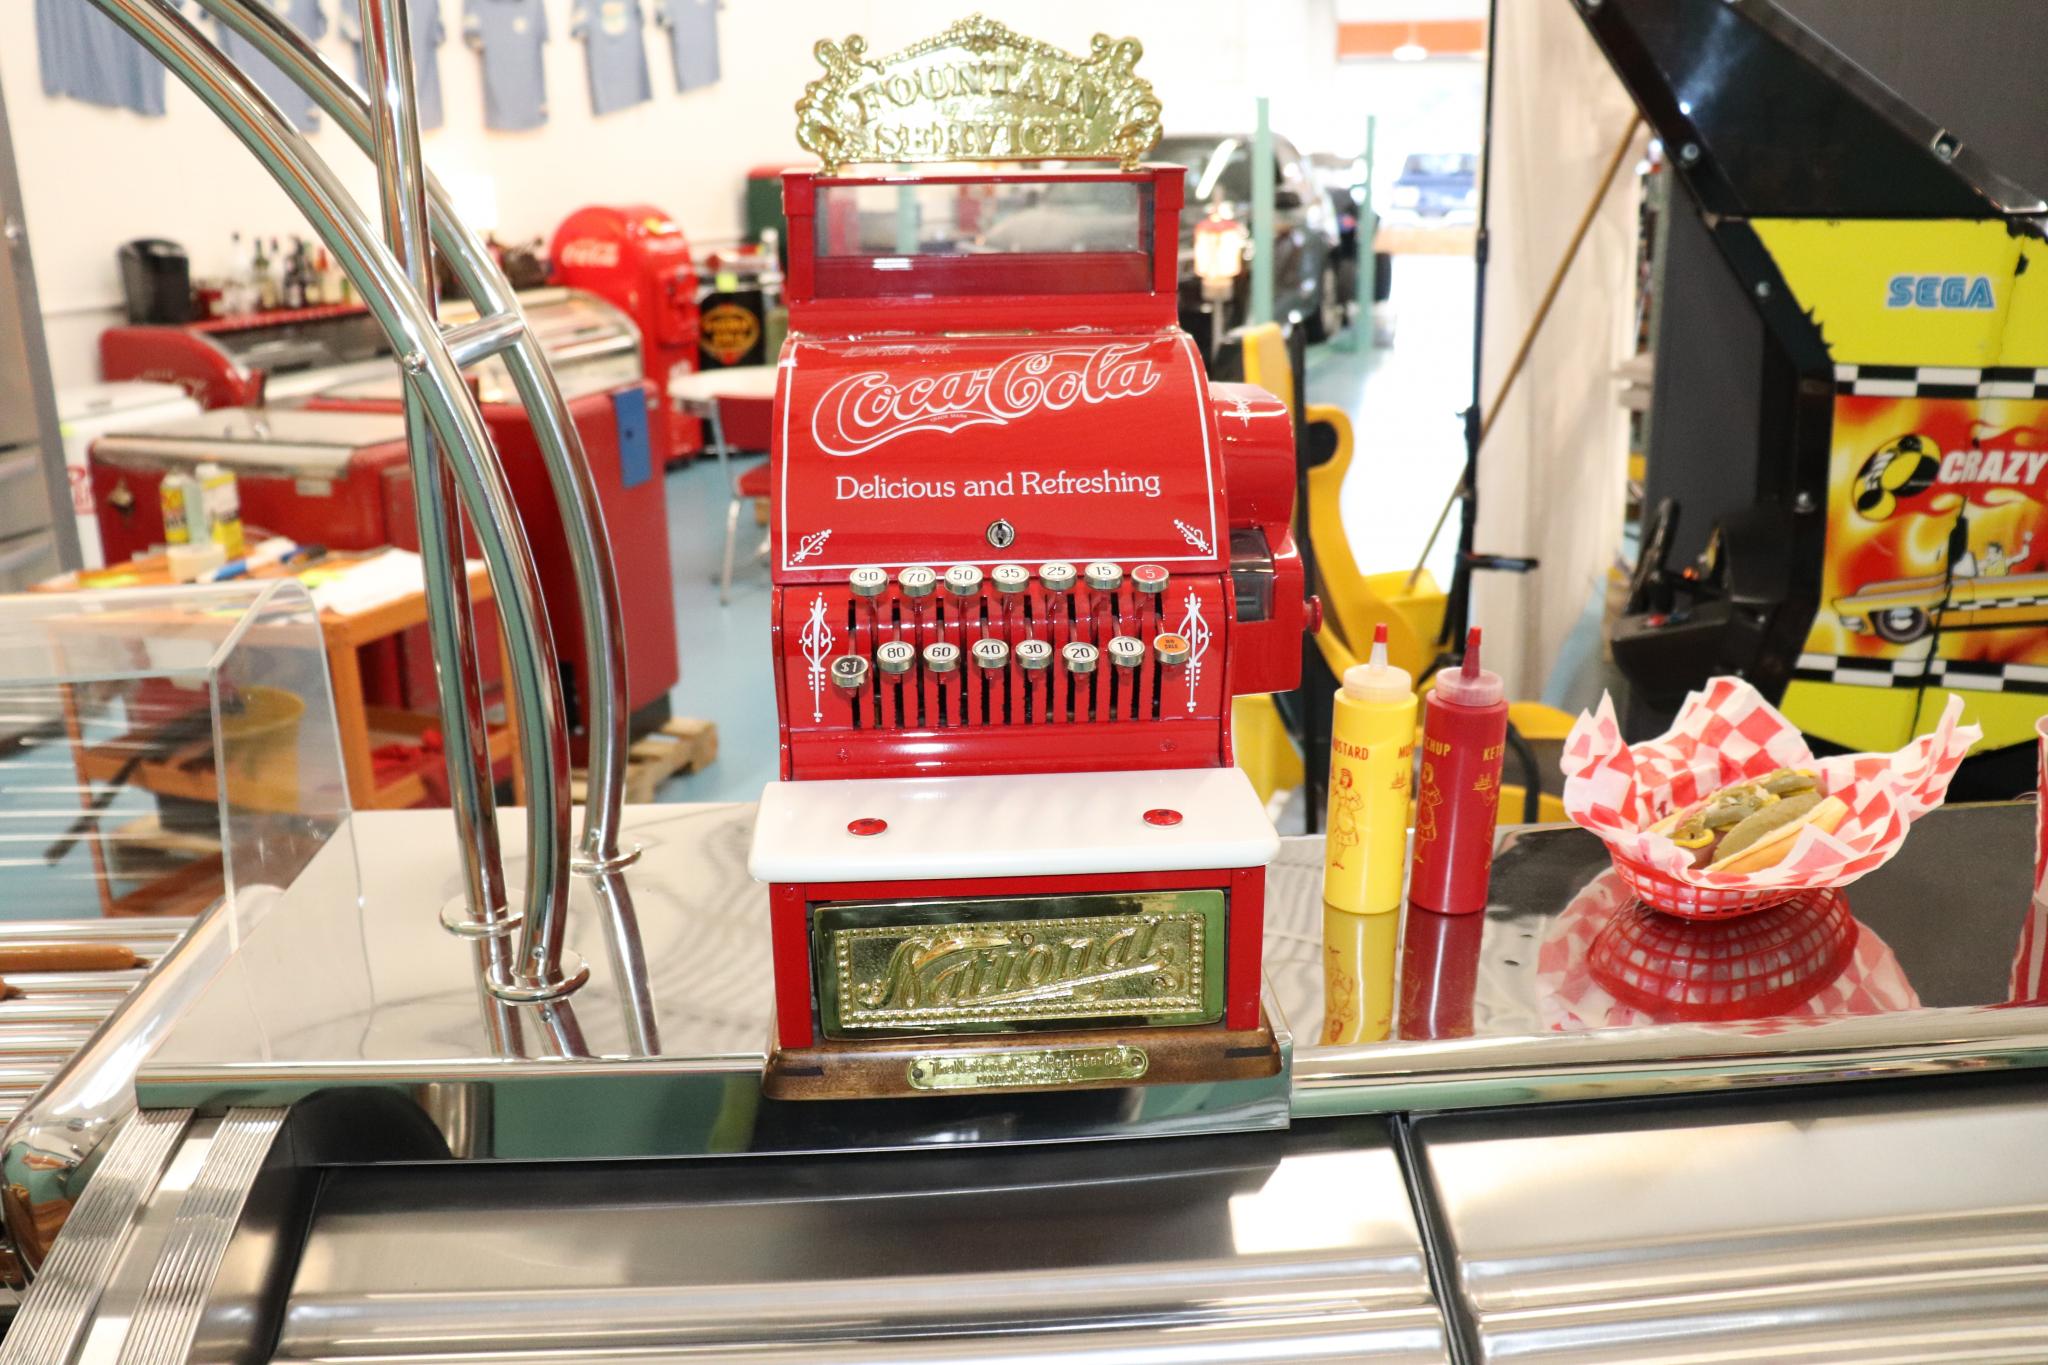 Complete with Coca-Cola cash register